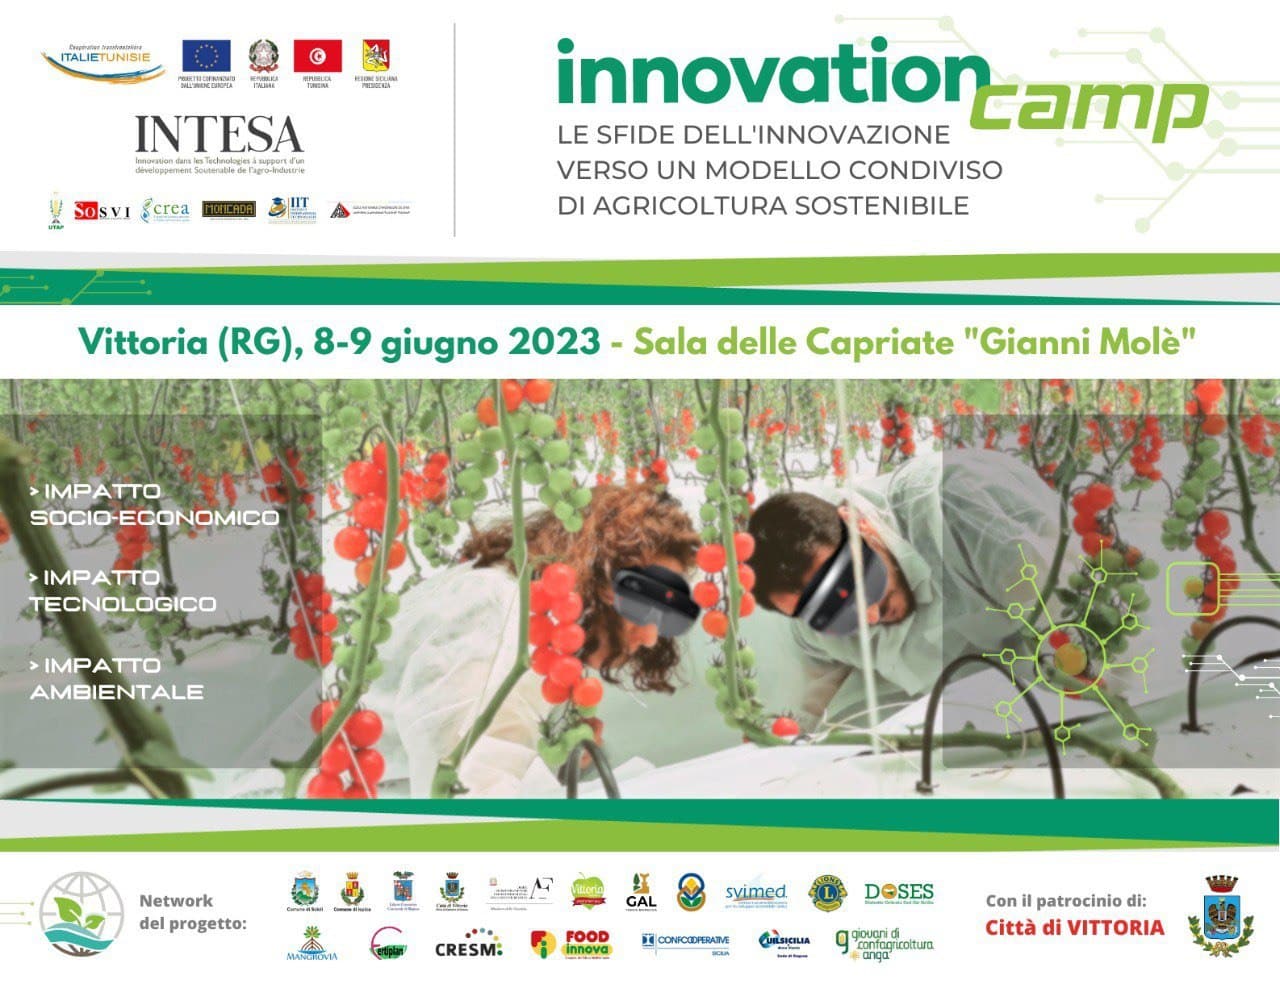 Innovation Camp - Progetto INTESA